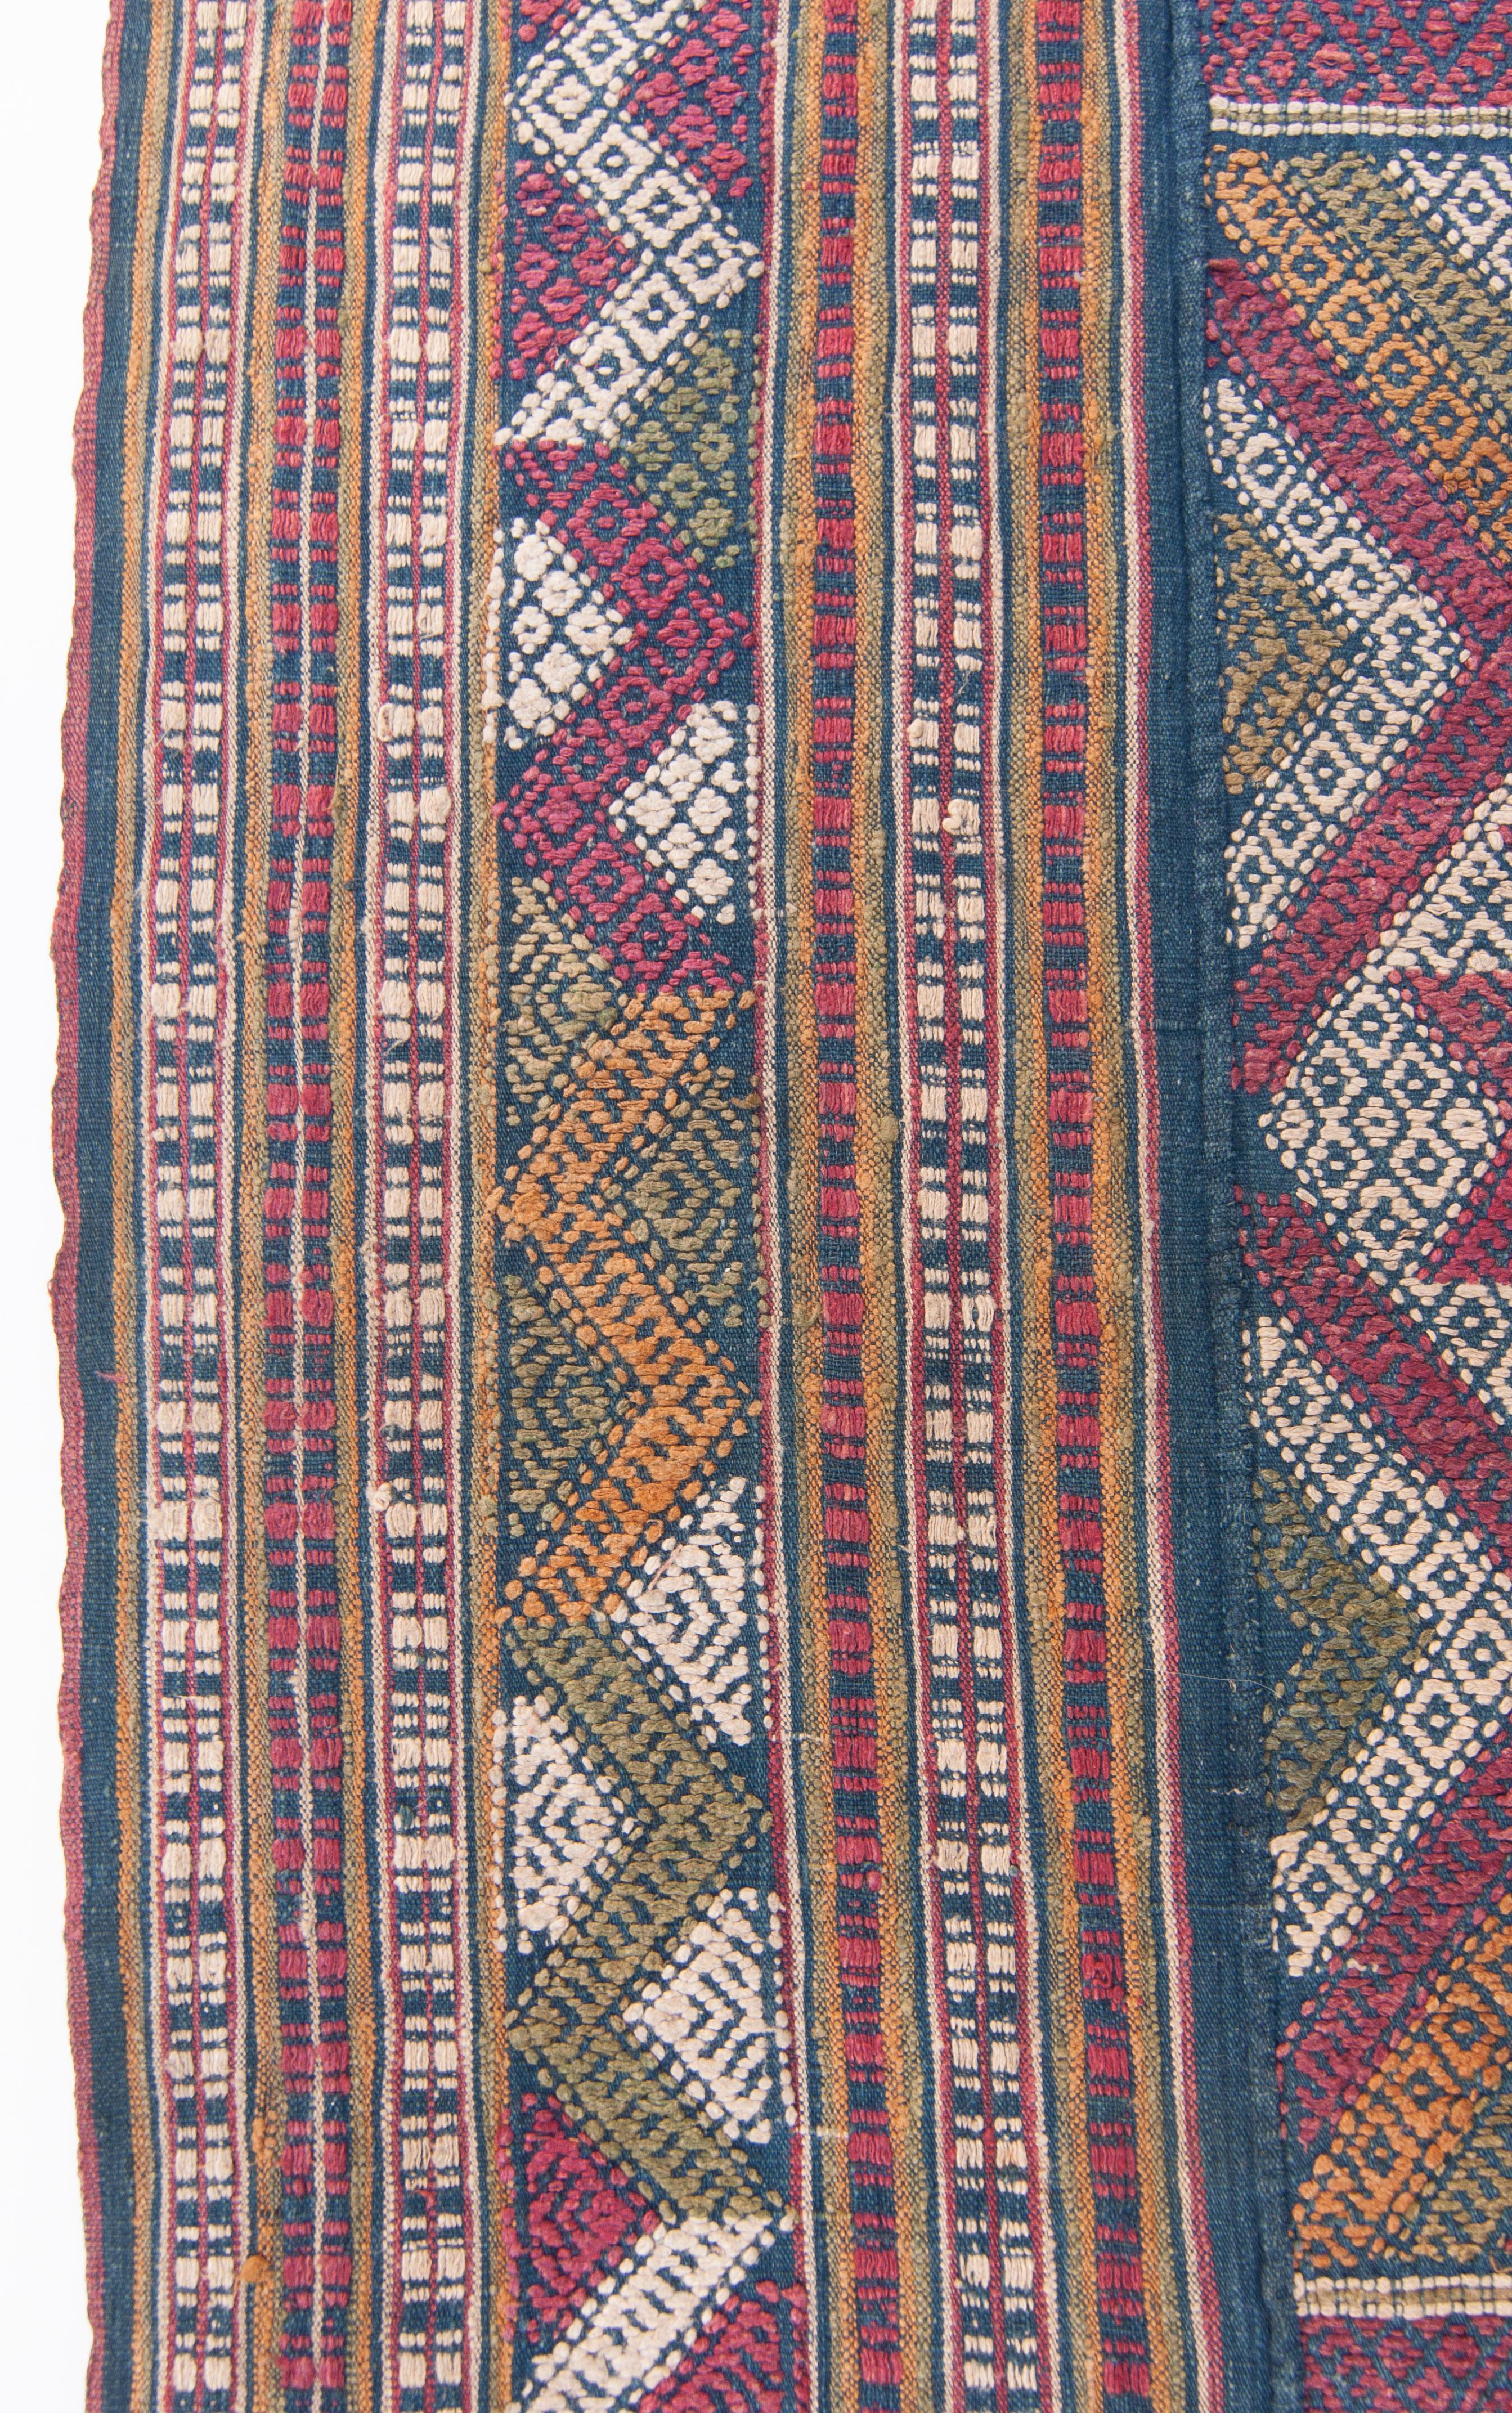 Cotton Vintage Bhutanese Ceremonial Silk Textile, Chagsi Pangkheb, Early 20th Century